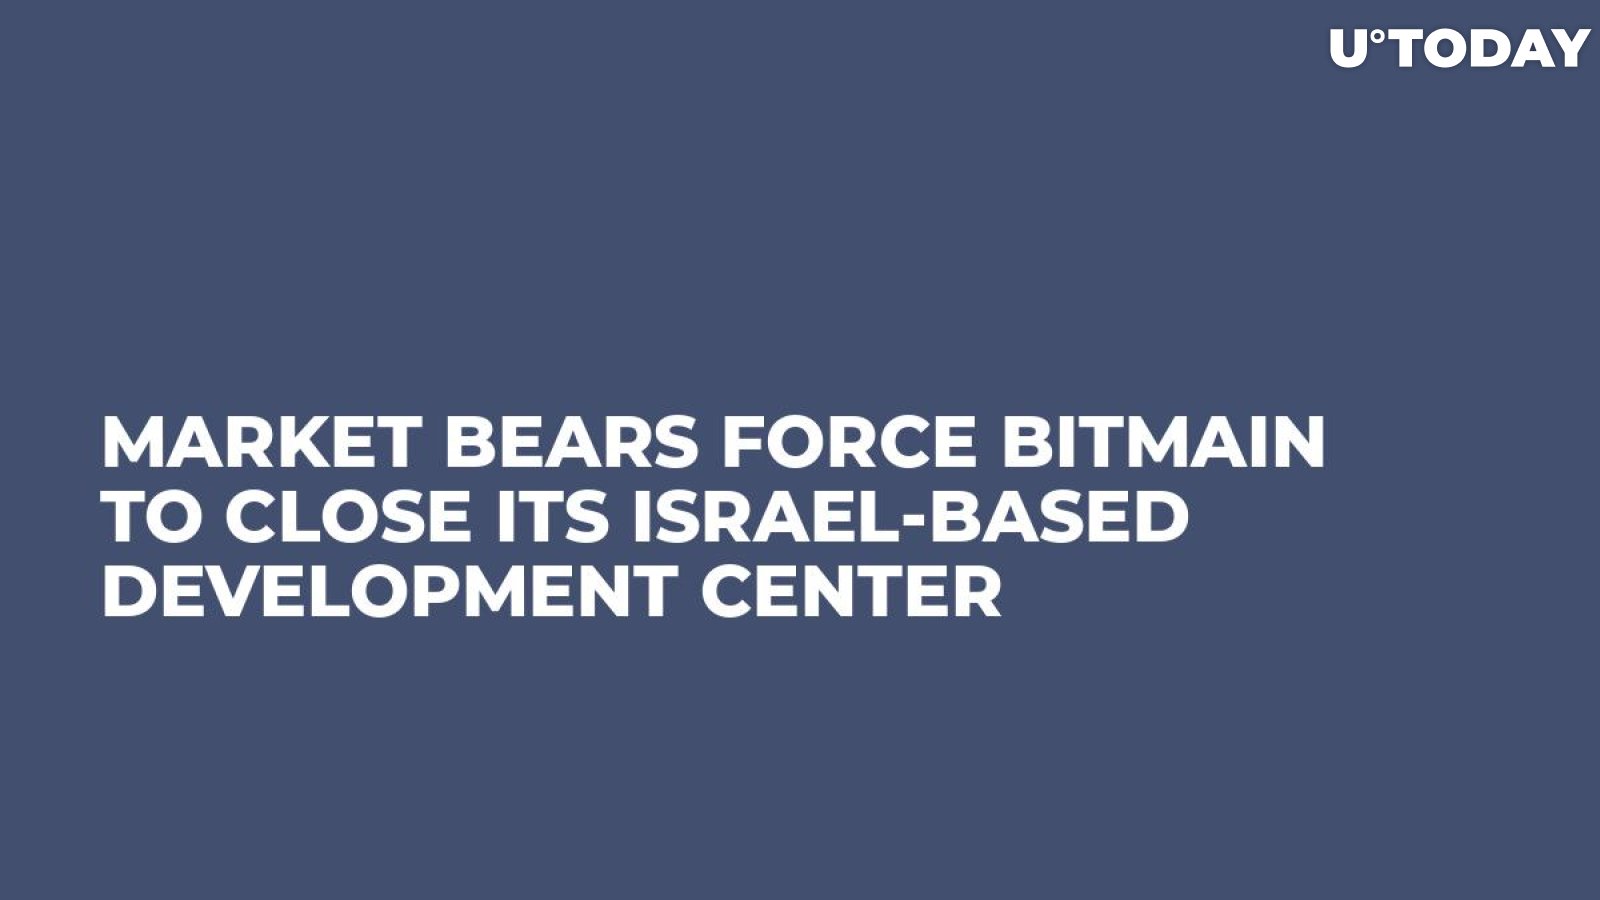 Market Bears Force Bitmain to Close Its Israel-Based Development Center